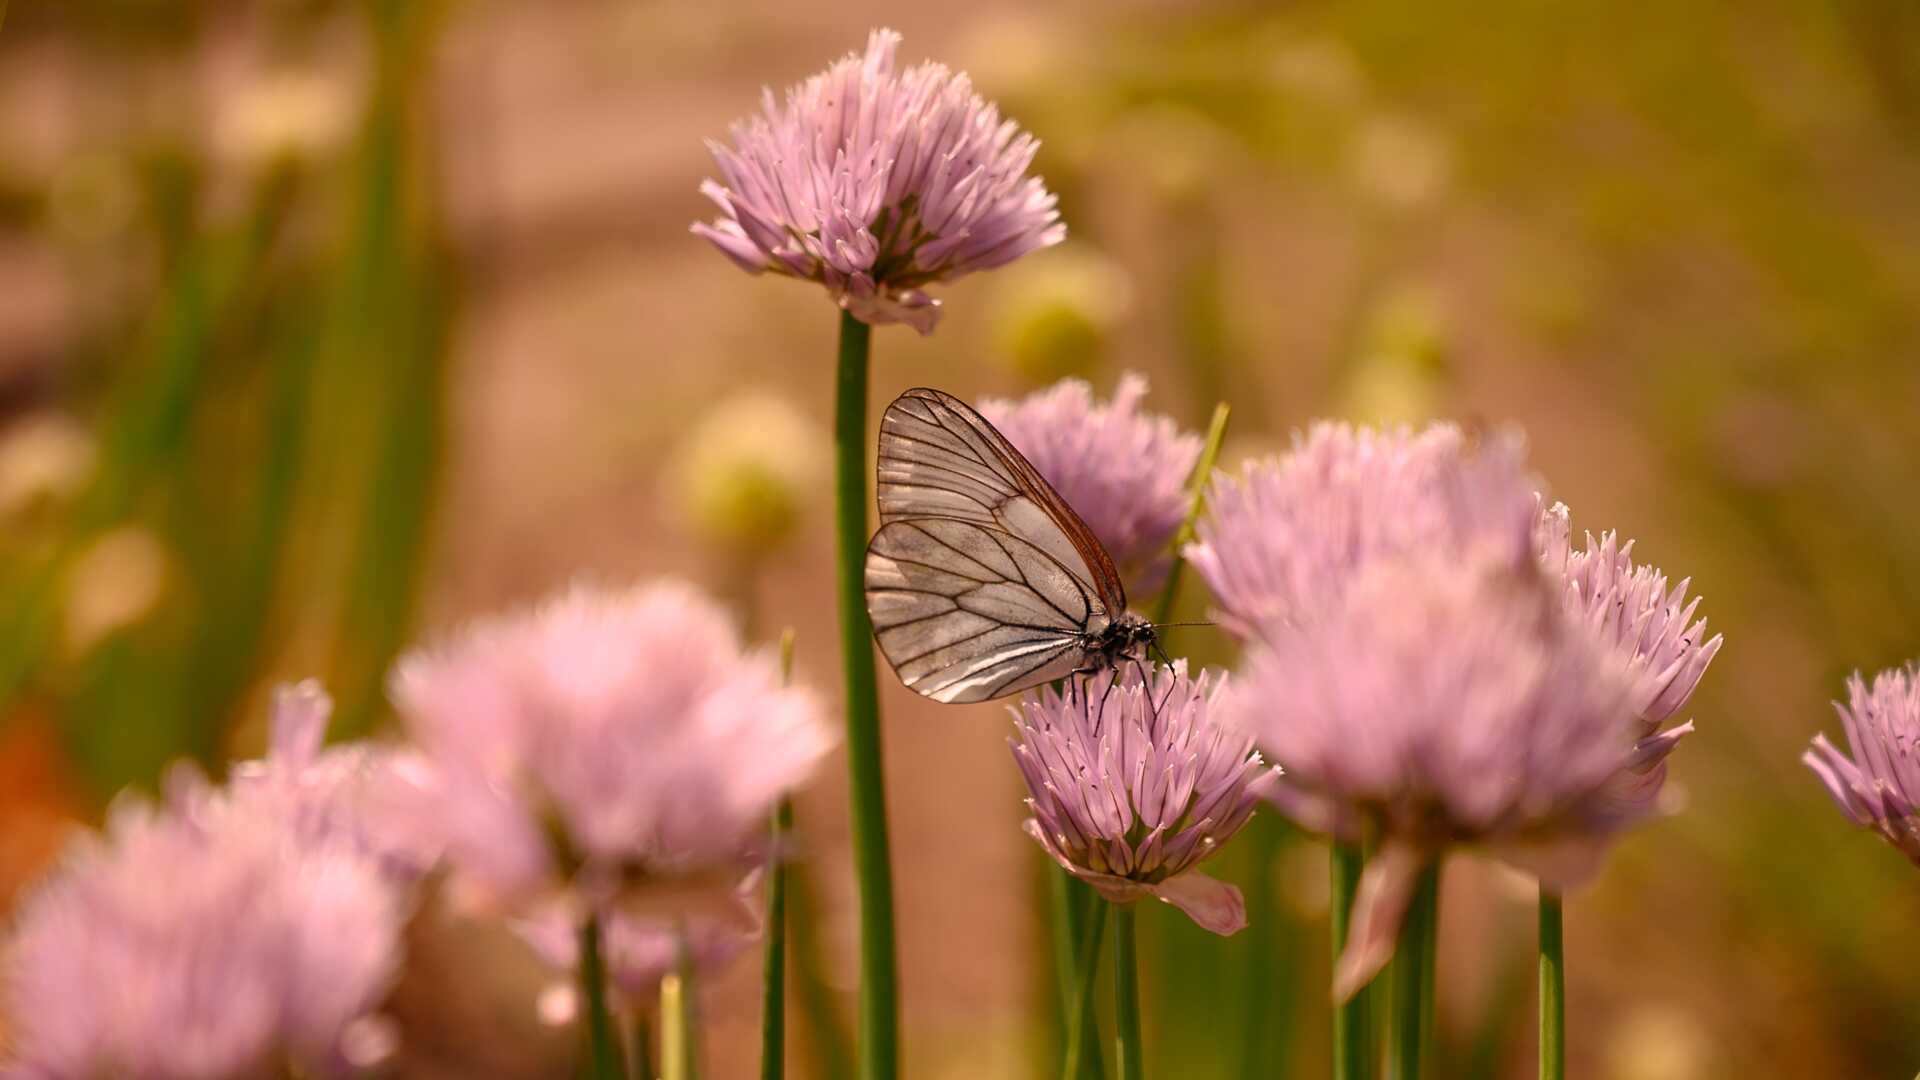 Simpleko_Cabbage butterfly_EPI Herobild 1920x1080.jpg